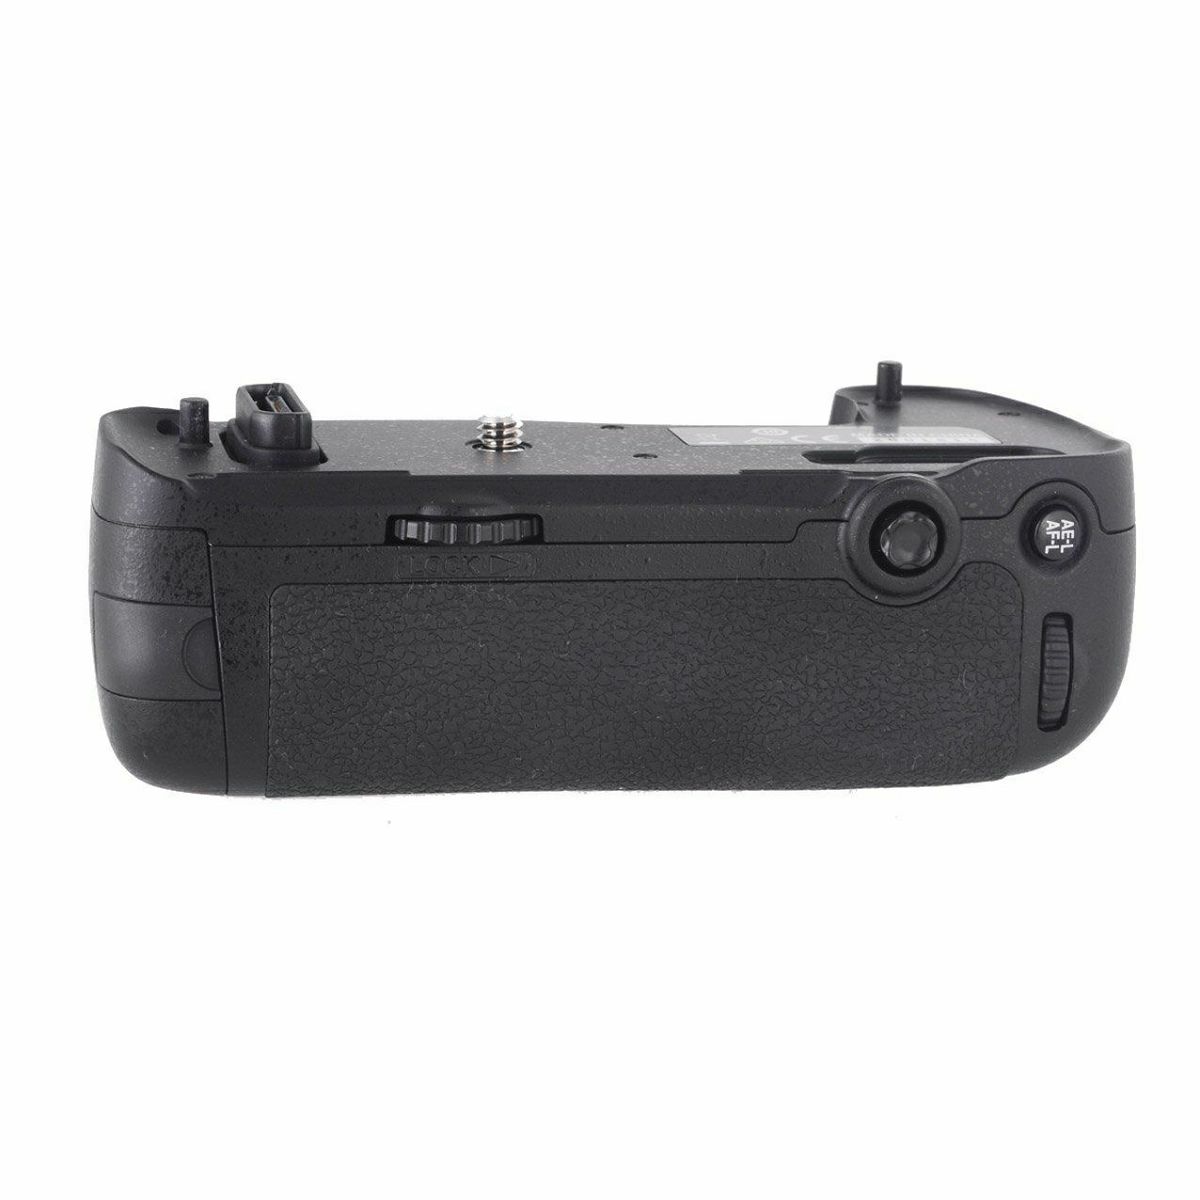 Voking Držač baterija za Nikon D750 Battery grip Batteriegriff (VK-BG-ND750)